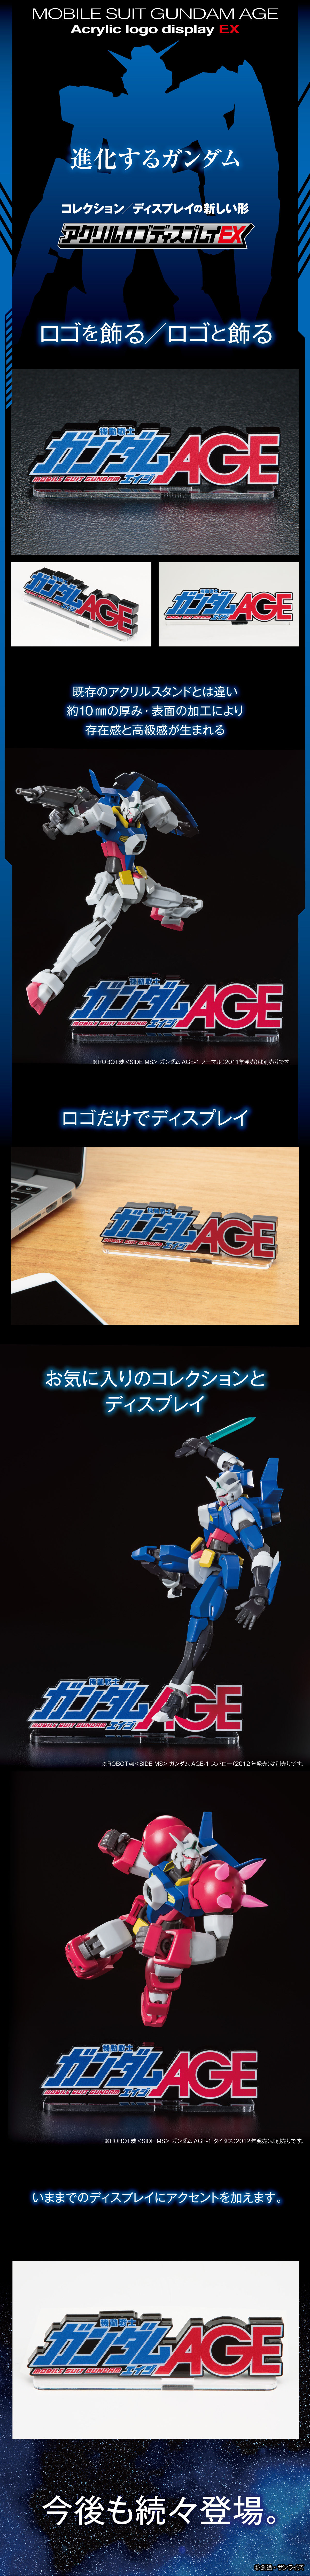 Acrylic Logo Diplay EX-Mobile Suit Gundam AGE